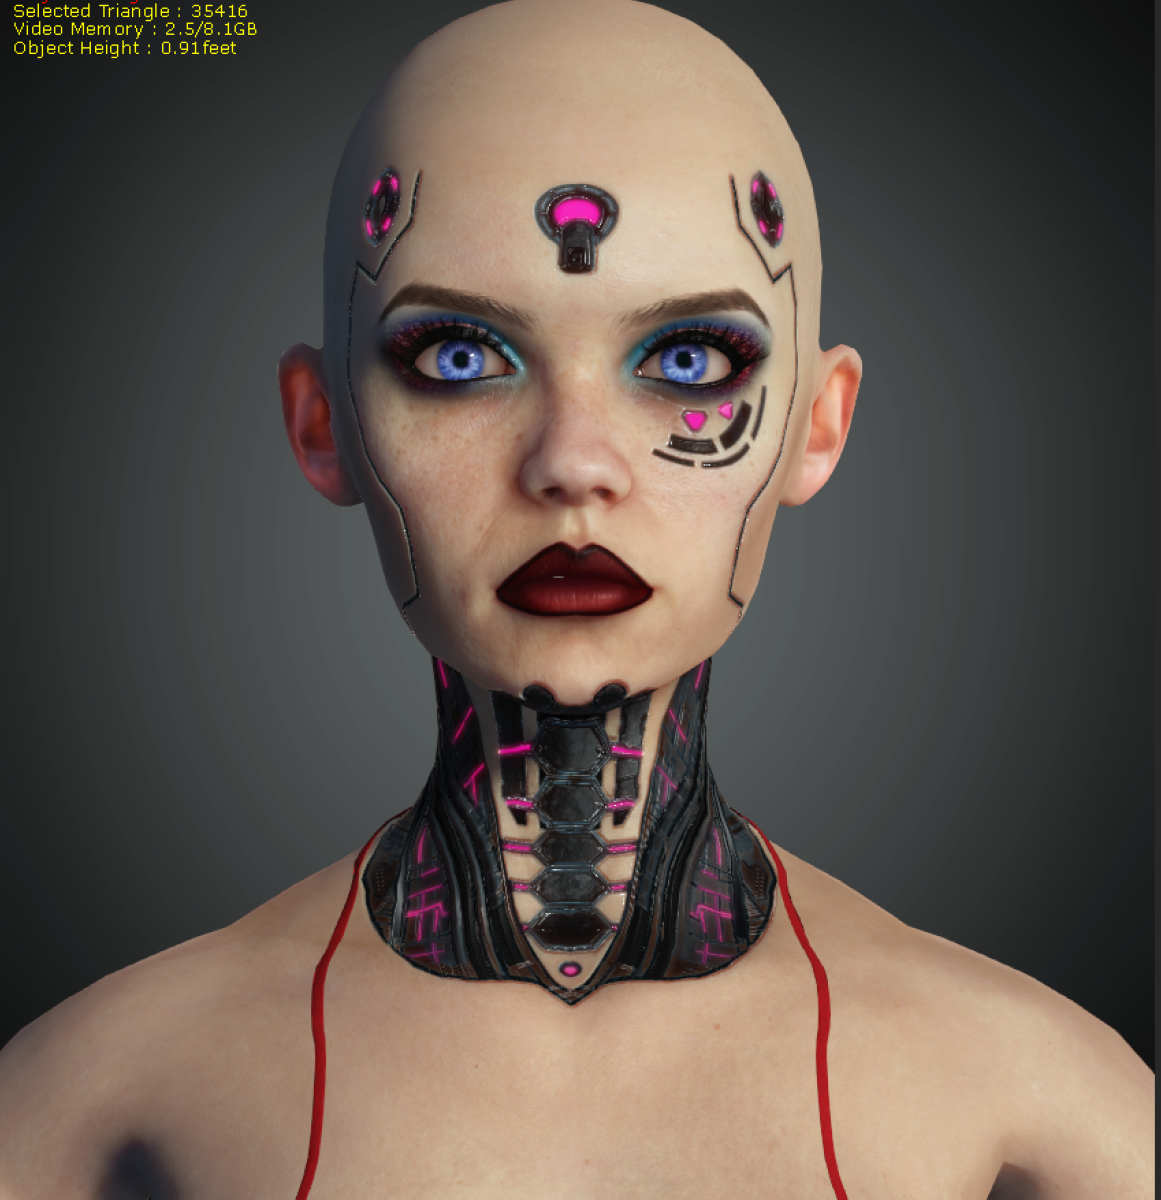 CC Digital Human Contest 2020 - Cyberpunk Character (Realistic)